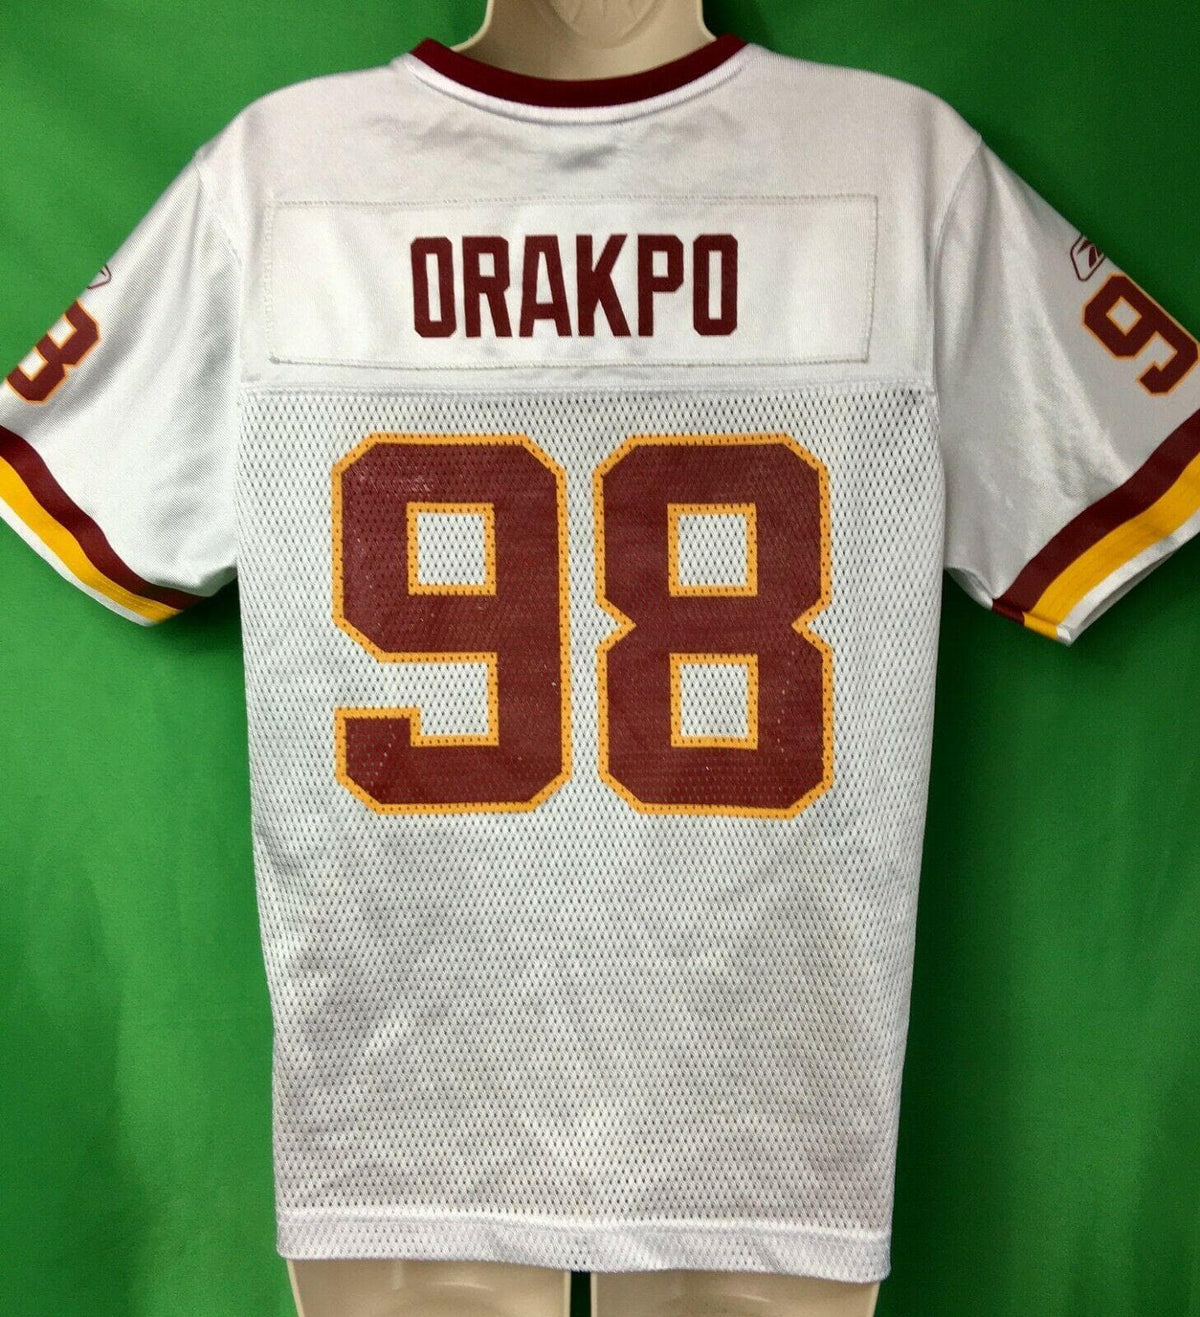 NFL Washington Commanders (Redskins) Brian Orakpo #98 Jersey Women's Large